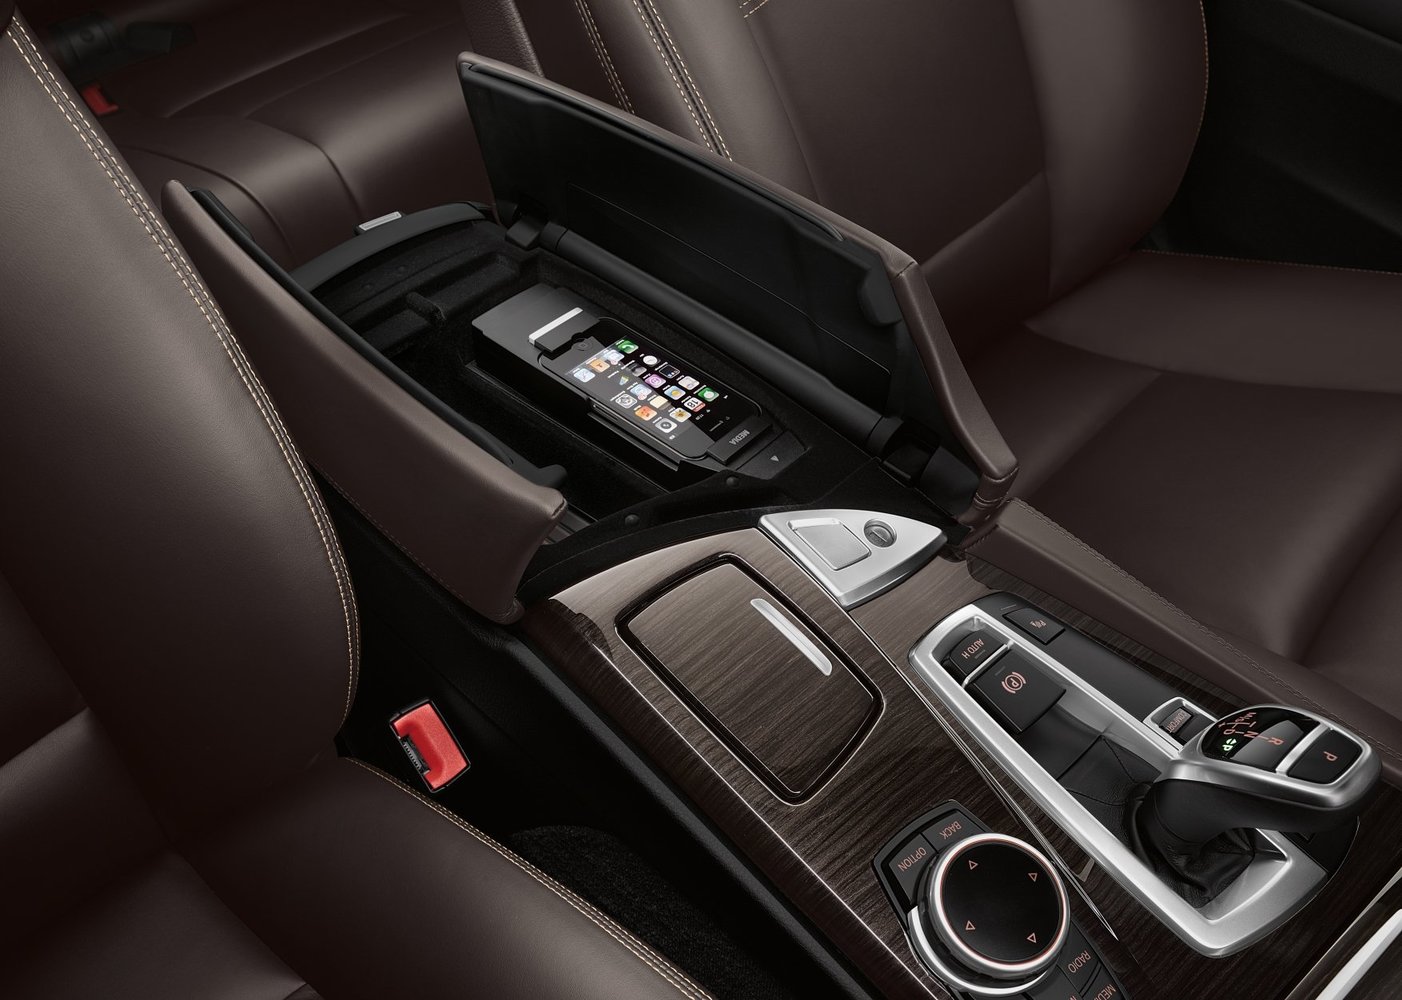 седан BMW 5er 2013 - 2016г выпуска модификация 2.0 AT (143 л.с.)